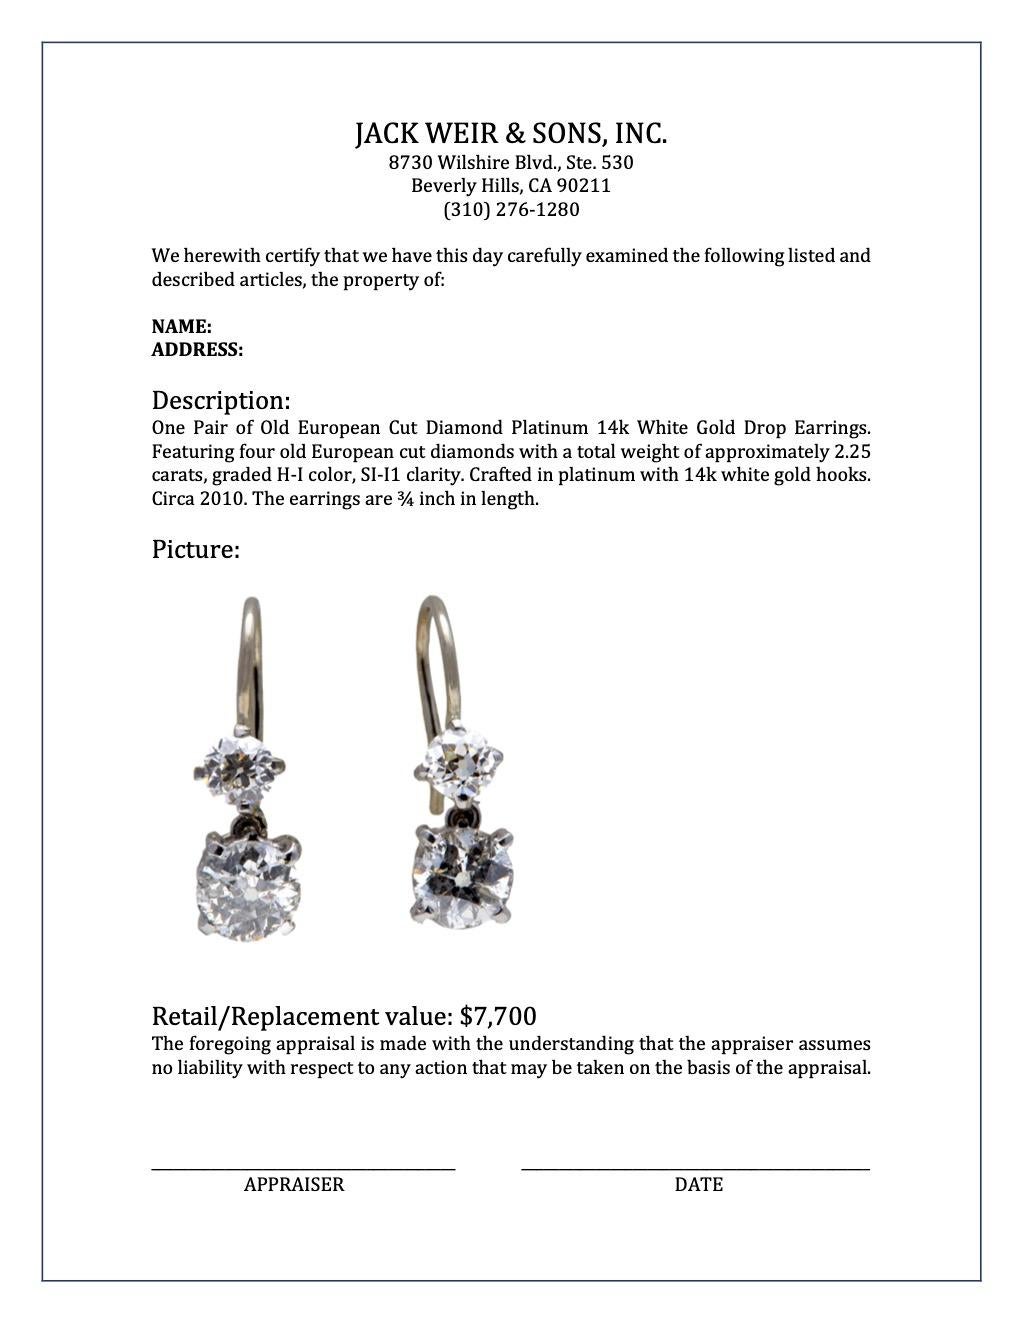 Old European Cut Diamond Platinum 14k White Gold Drop Earrings 2